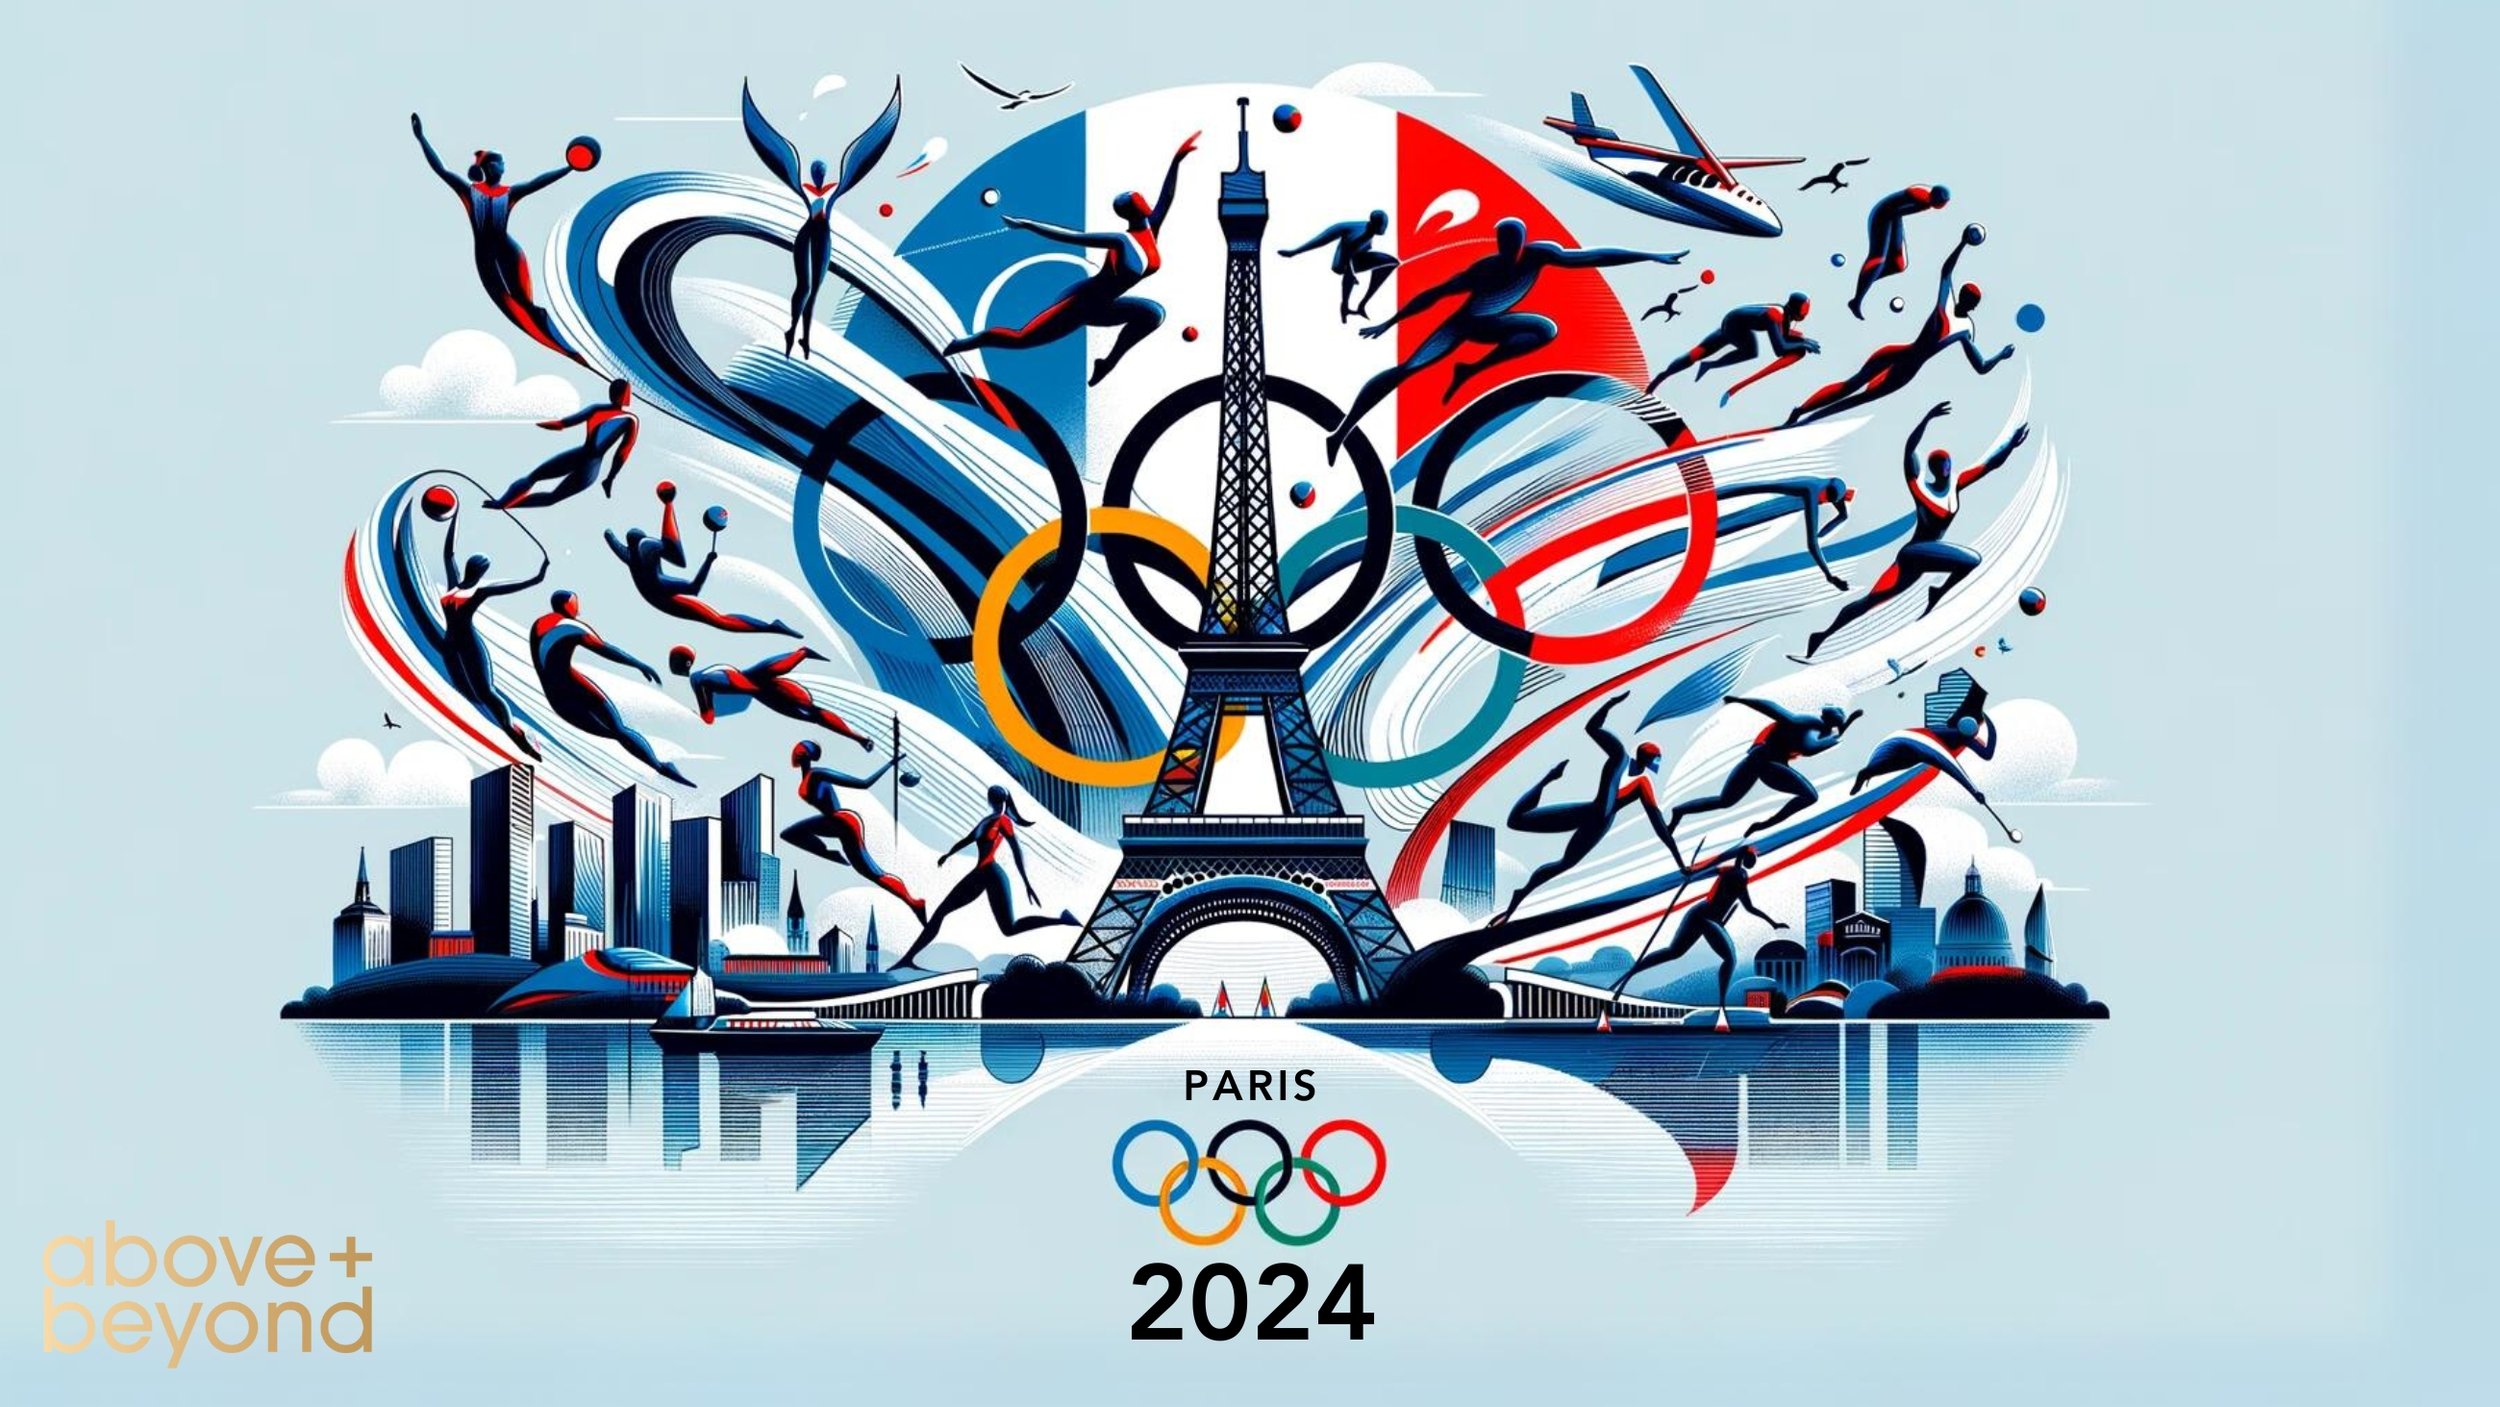 The 2024 Olympics (Paris)